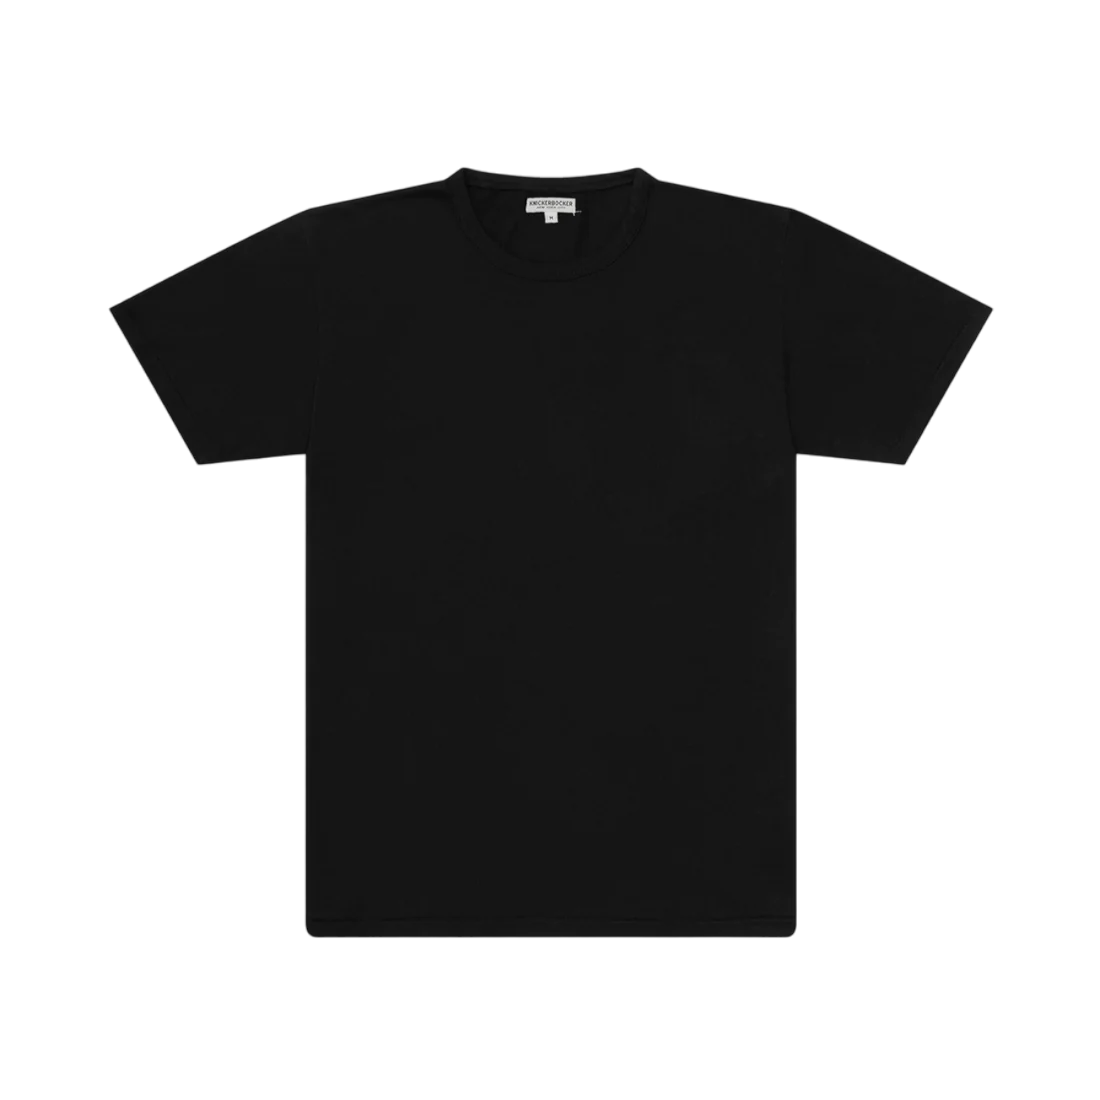 Knickerbocker - The T-Shirt